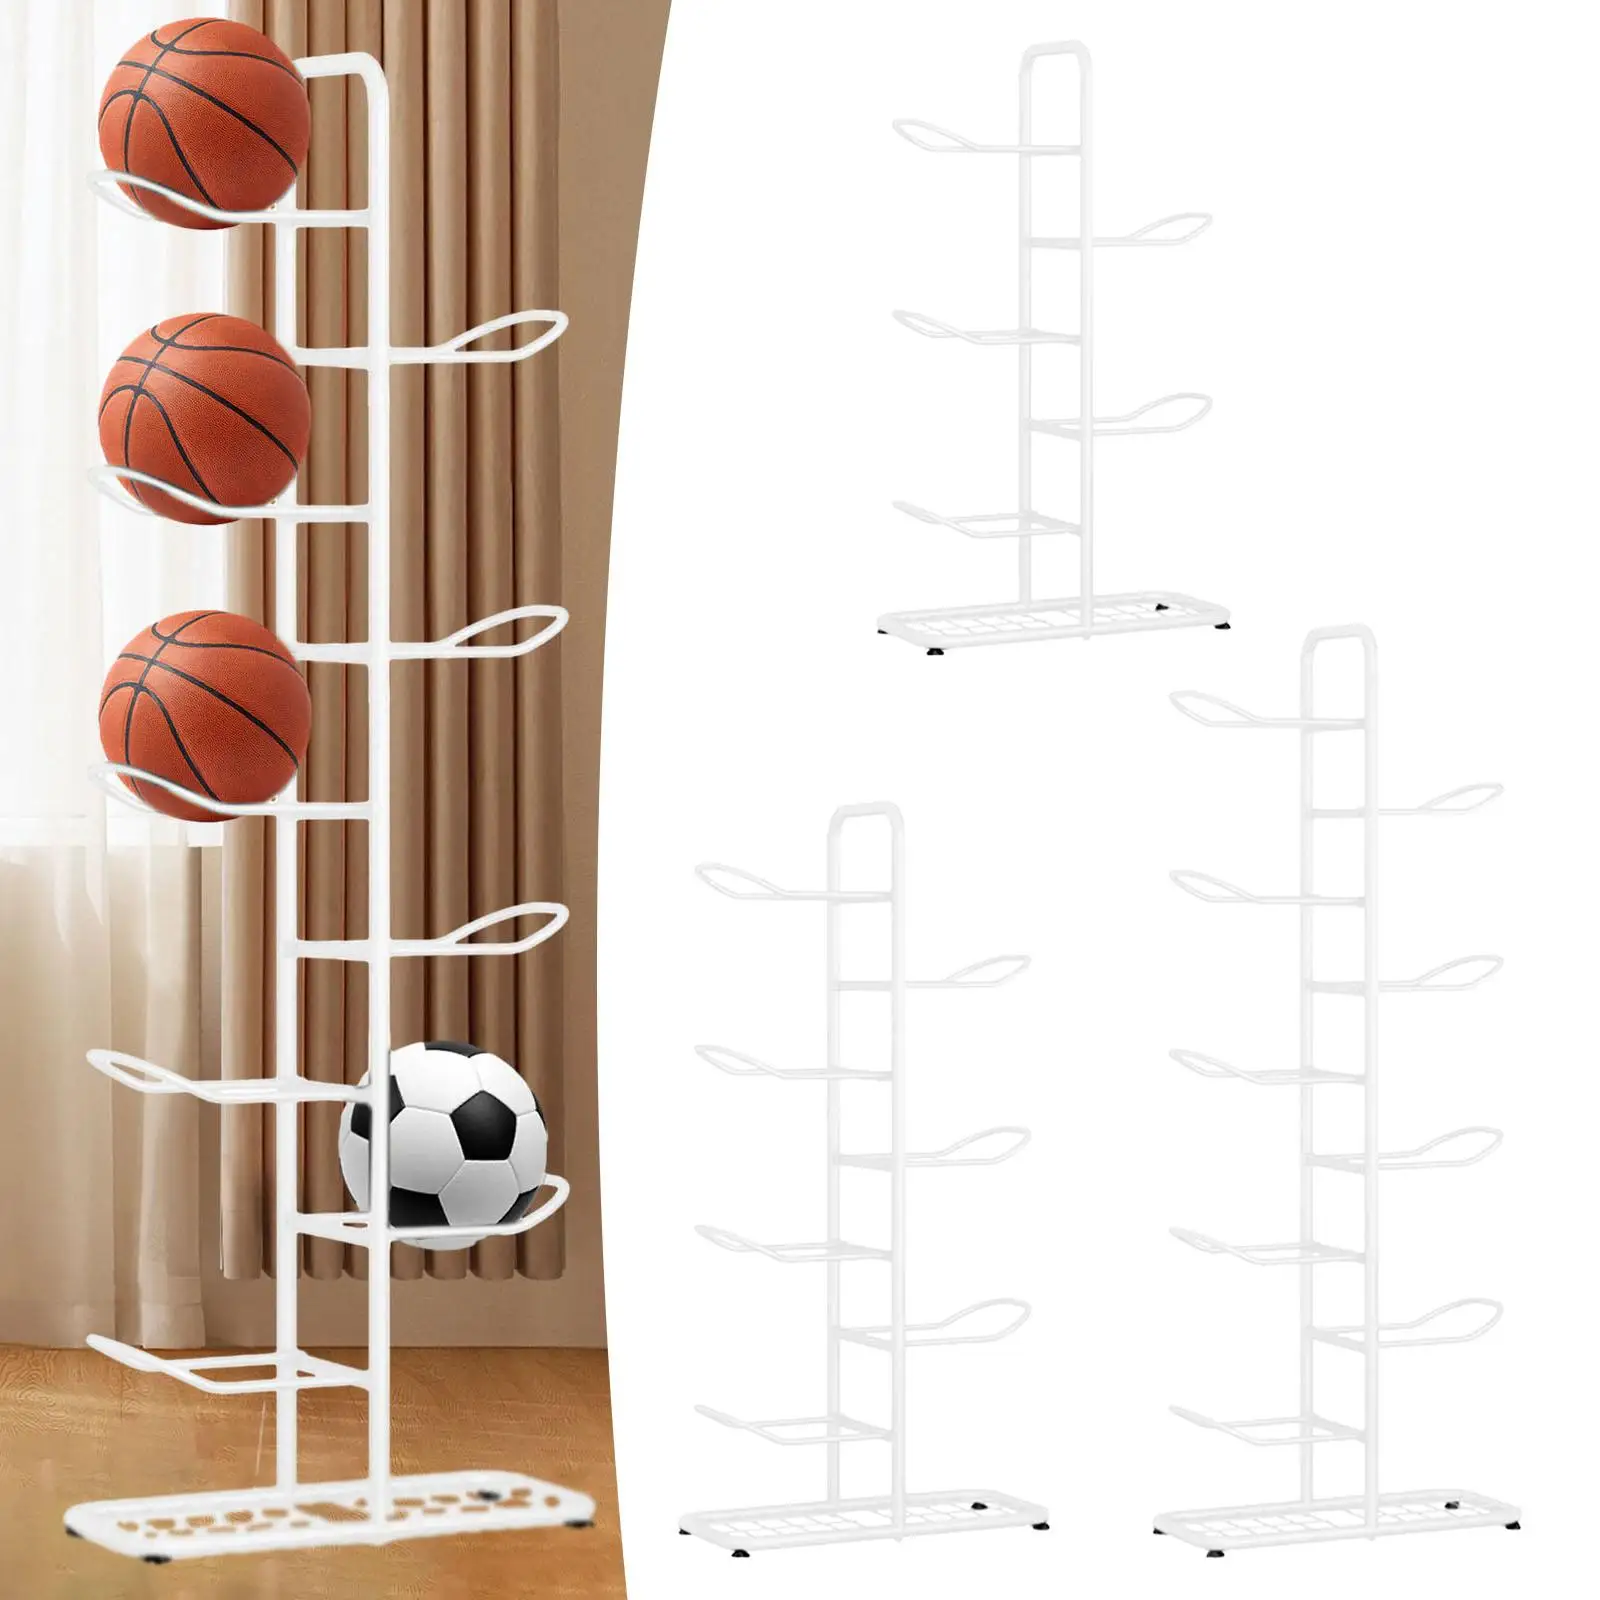 3 Tiers Ball Rack Ball Storage Holder Indoor Display Stand Holder Sports Equipment Storage Organizer for Rackets, Baseball